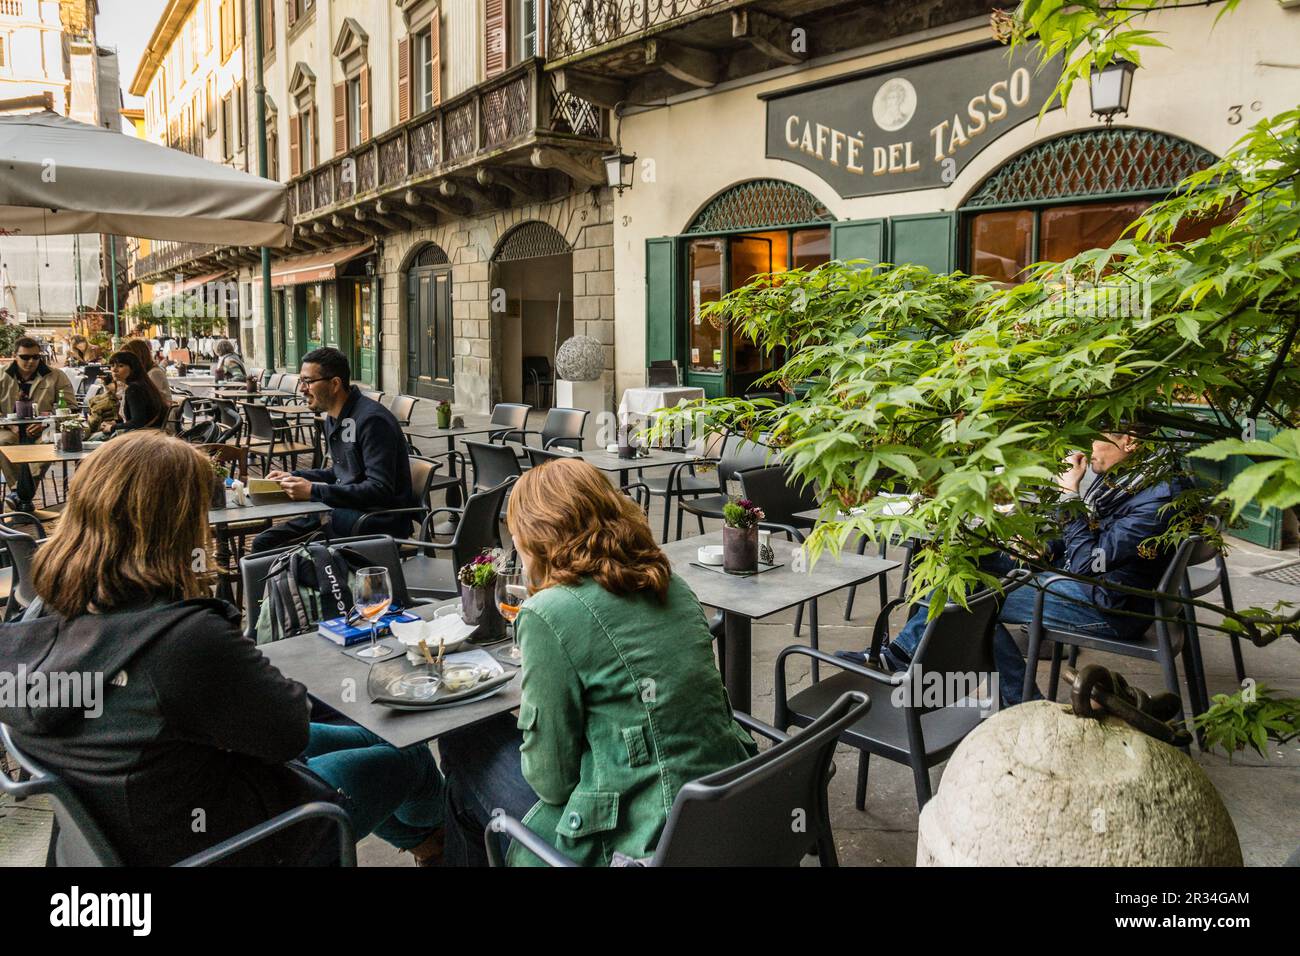 Cafe del Tasso, plaza Vecchia,ciudad alta,Bergame, Lombardie, Italia, Europa. Banque D'Images